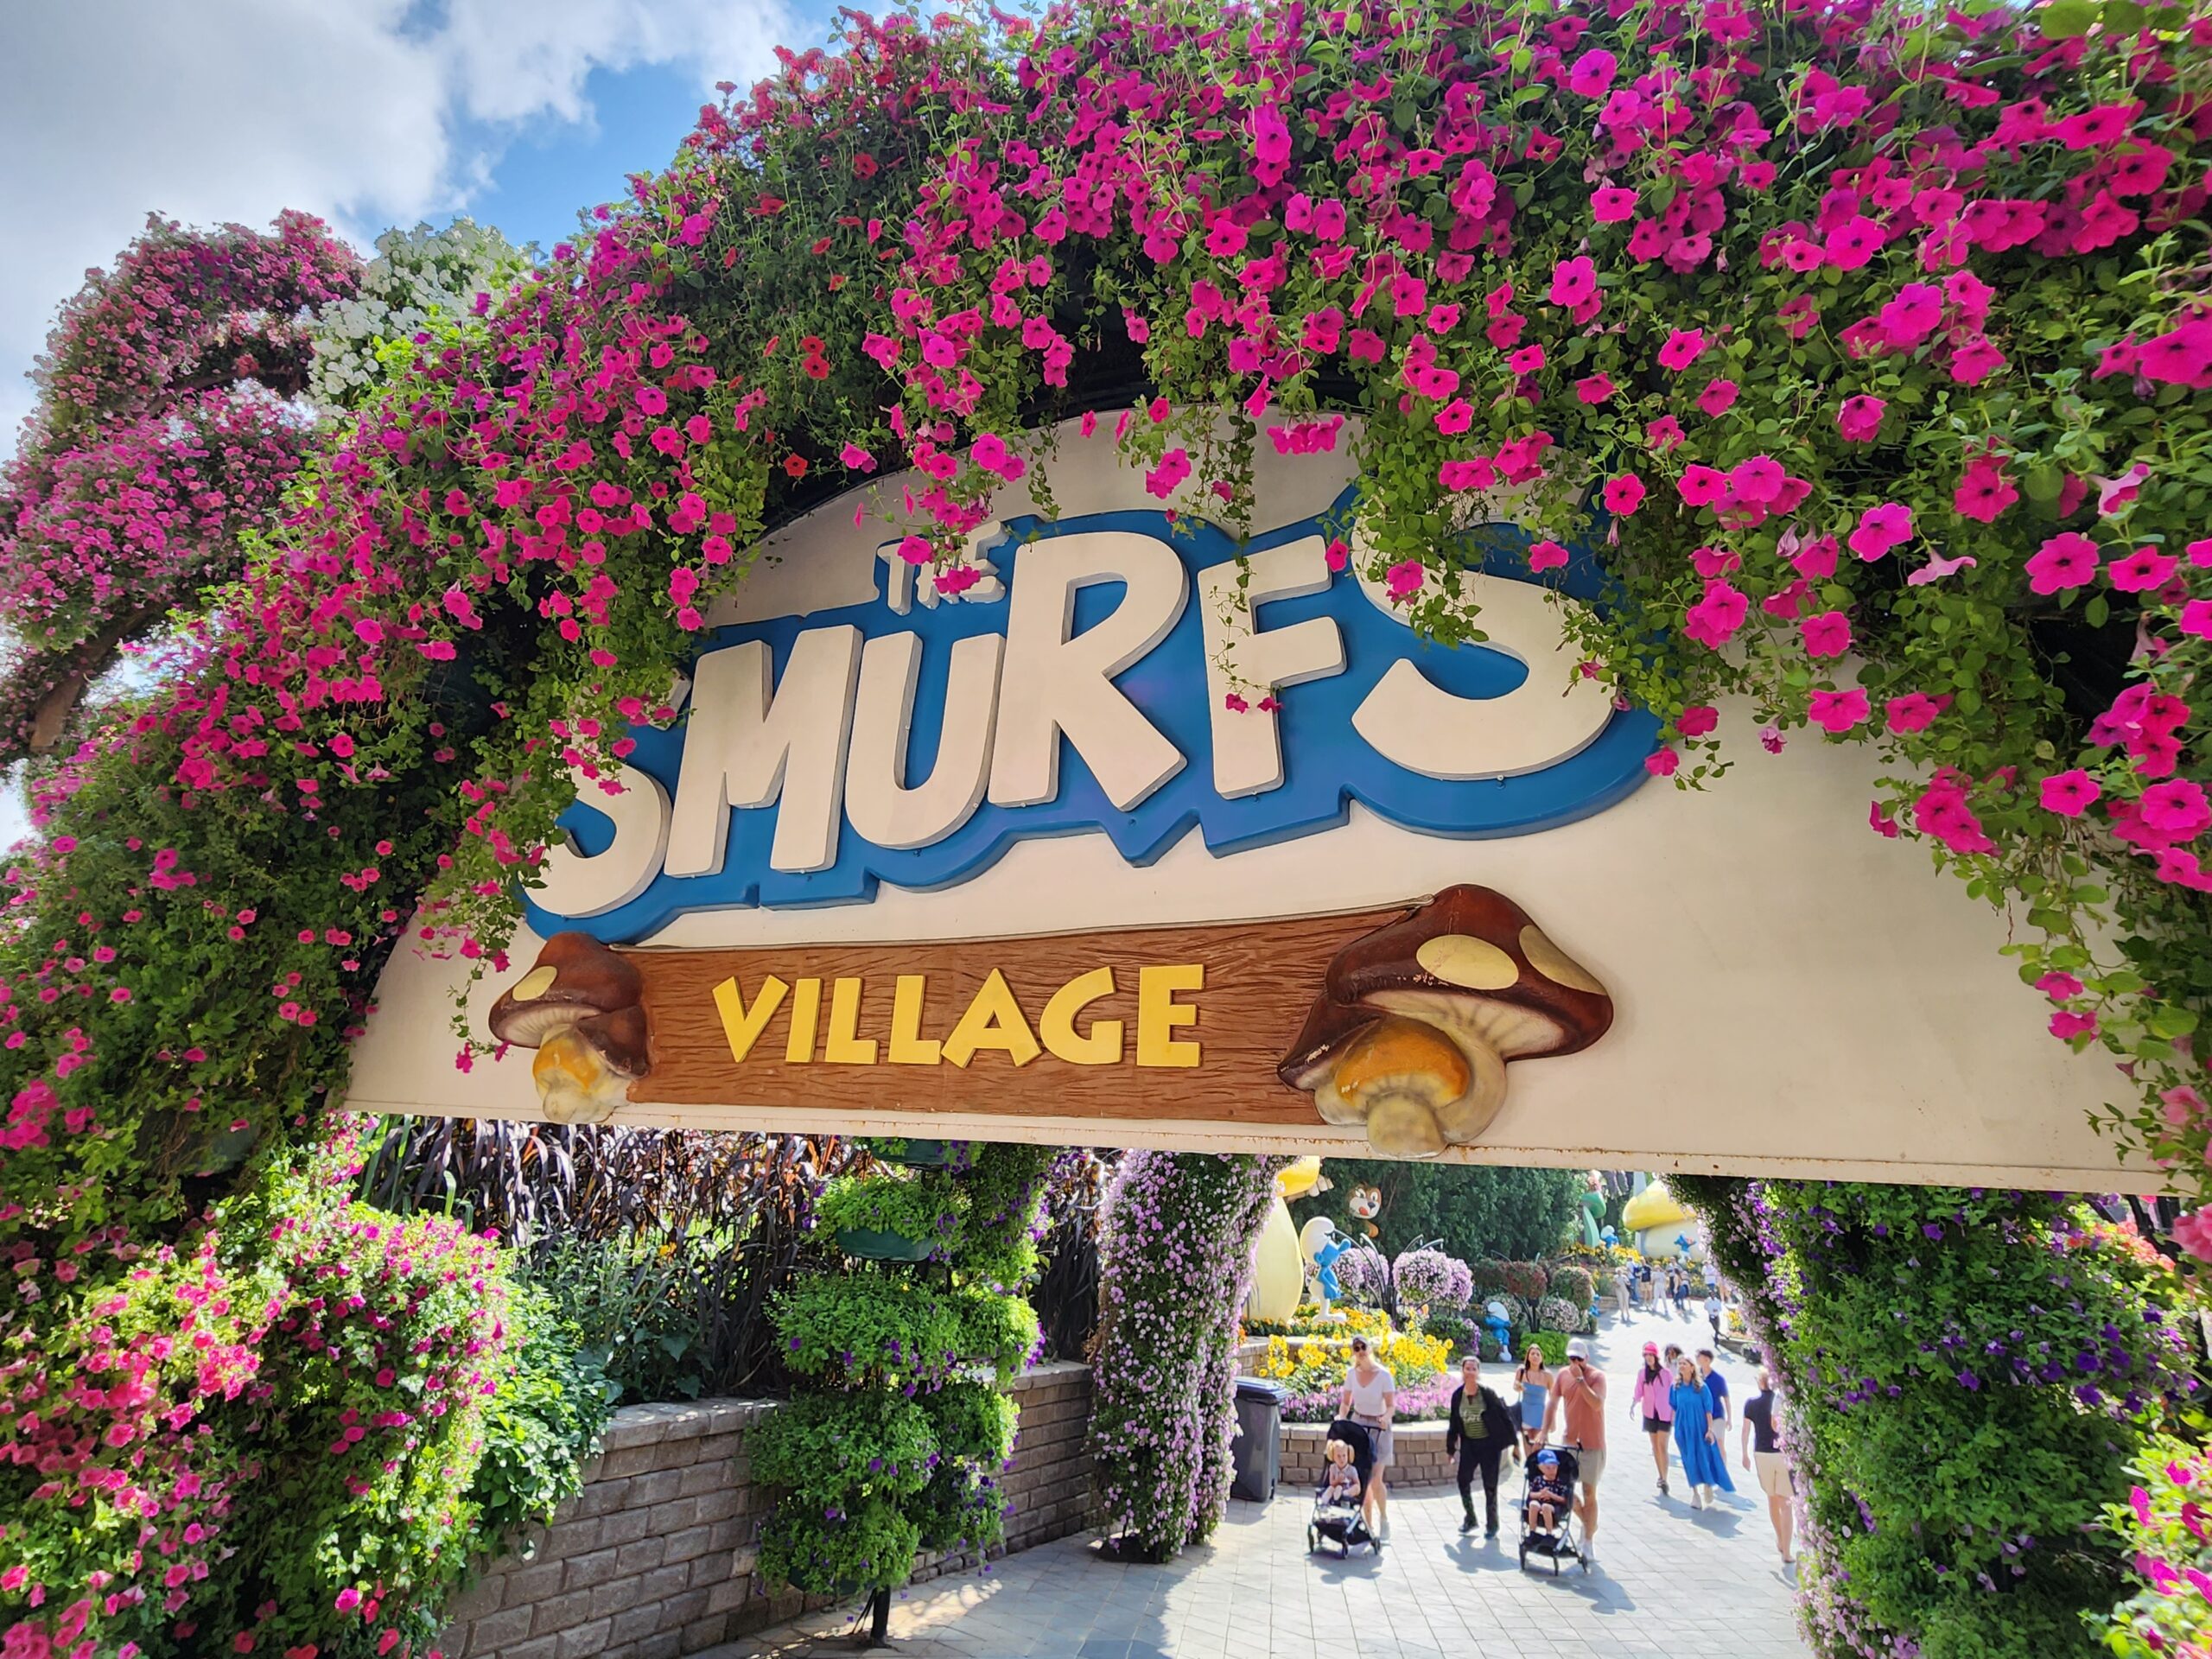 The Smurfs Village, Dubai Miracle Garden 